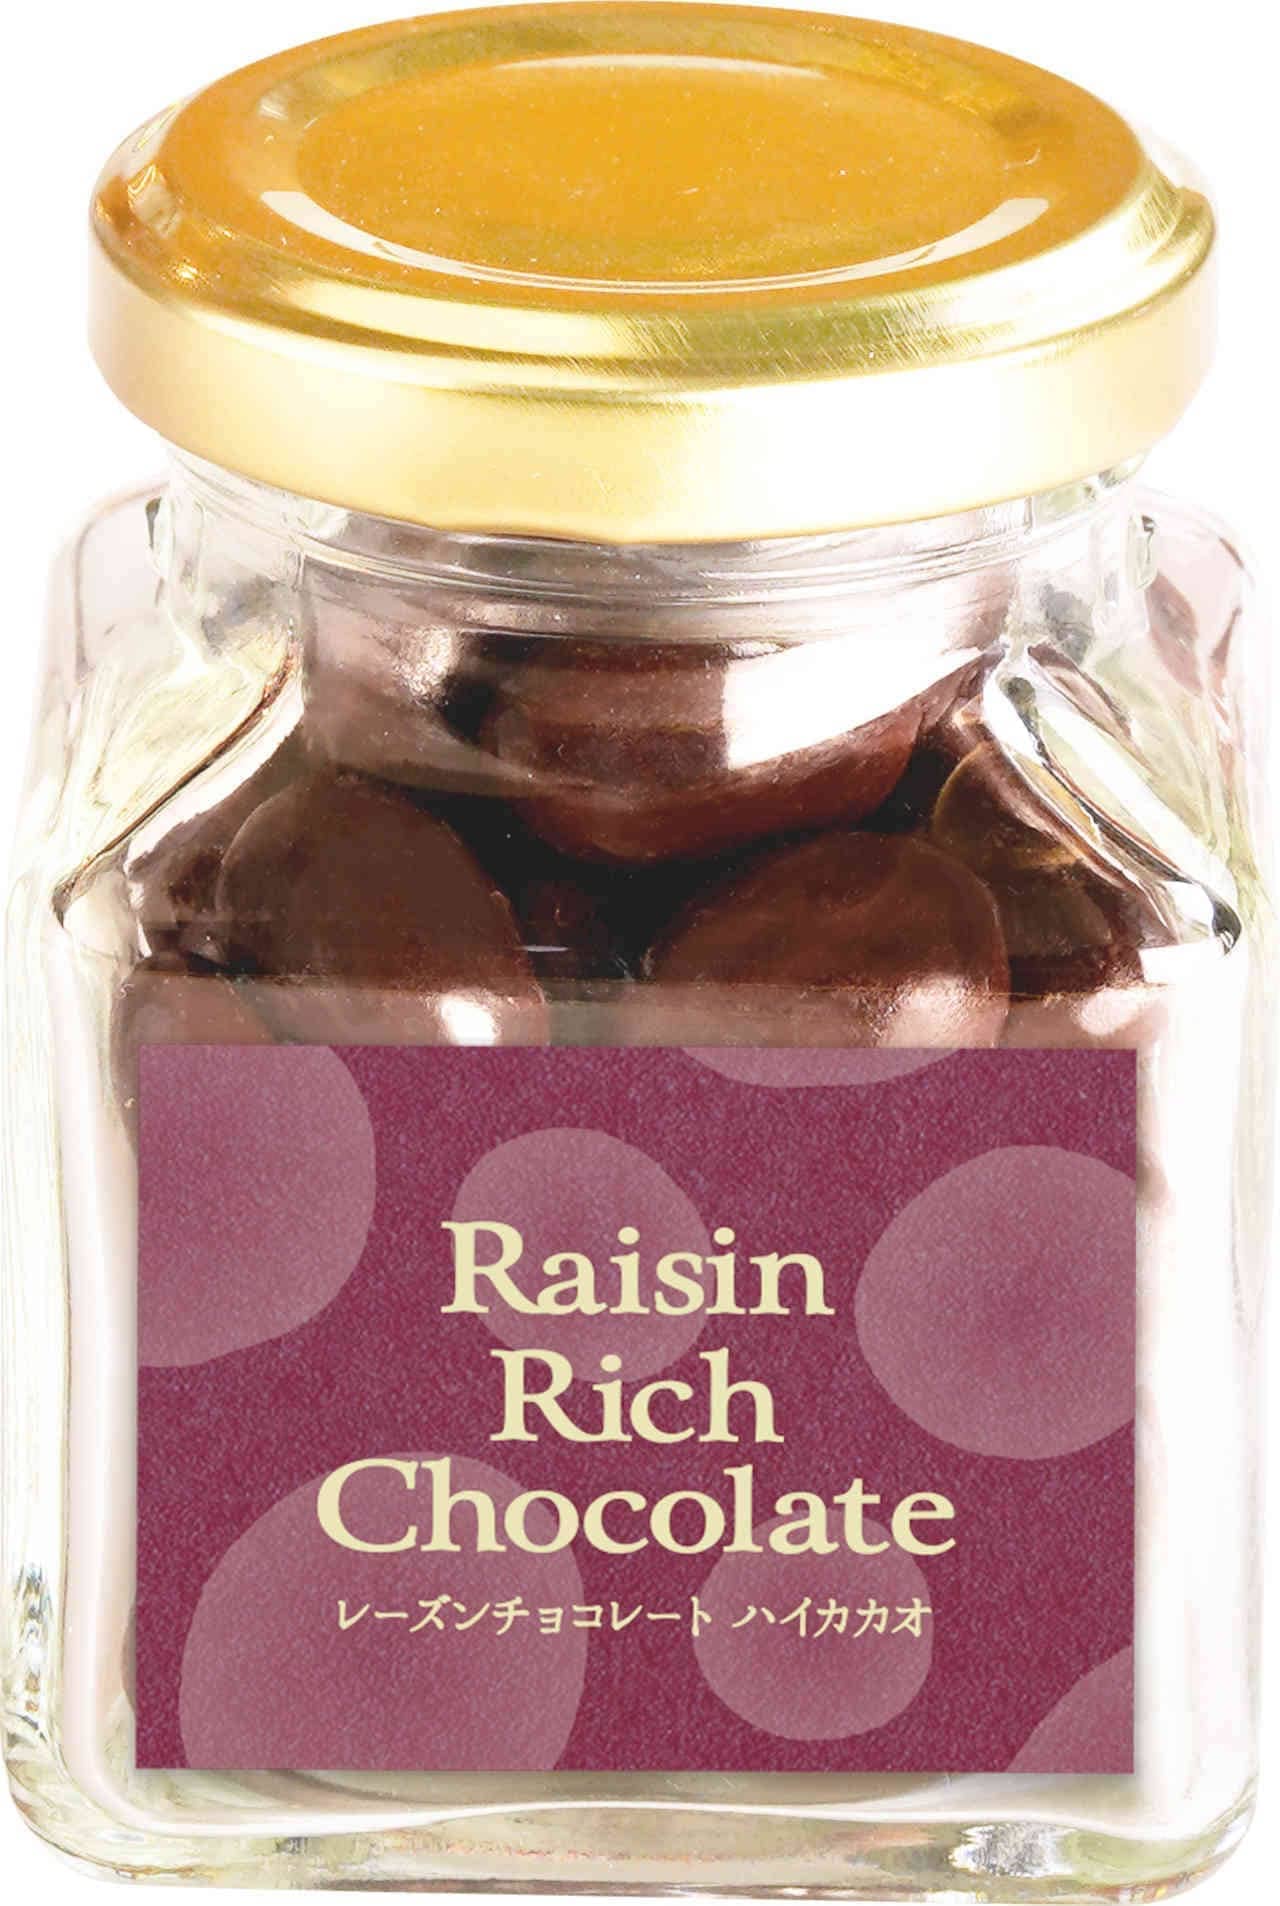 Umoto "Raisin Chocolate-High Cacao"